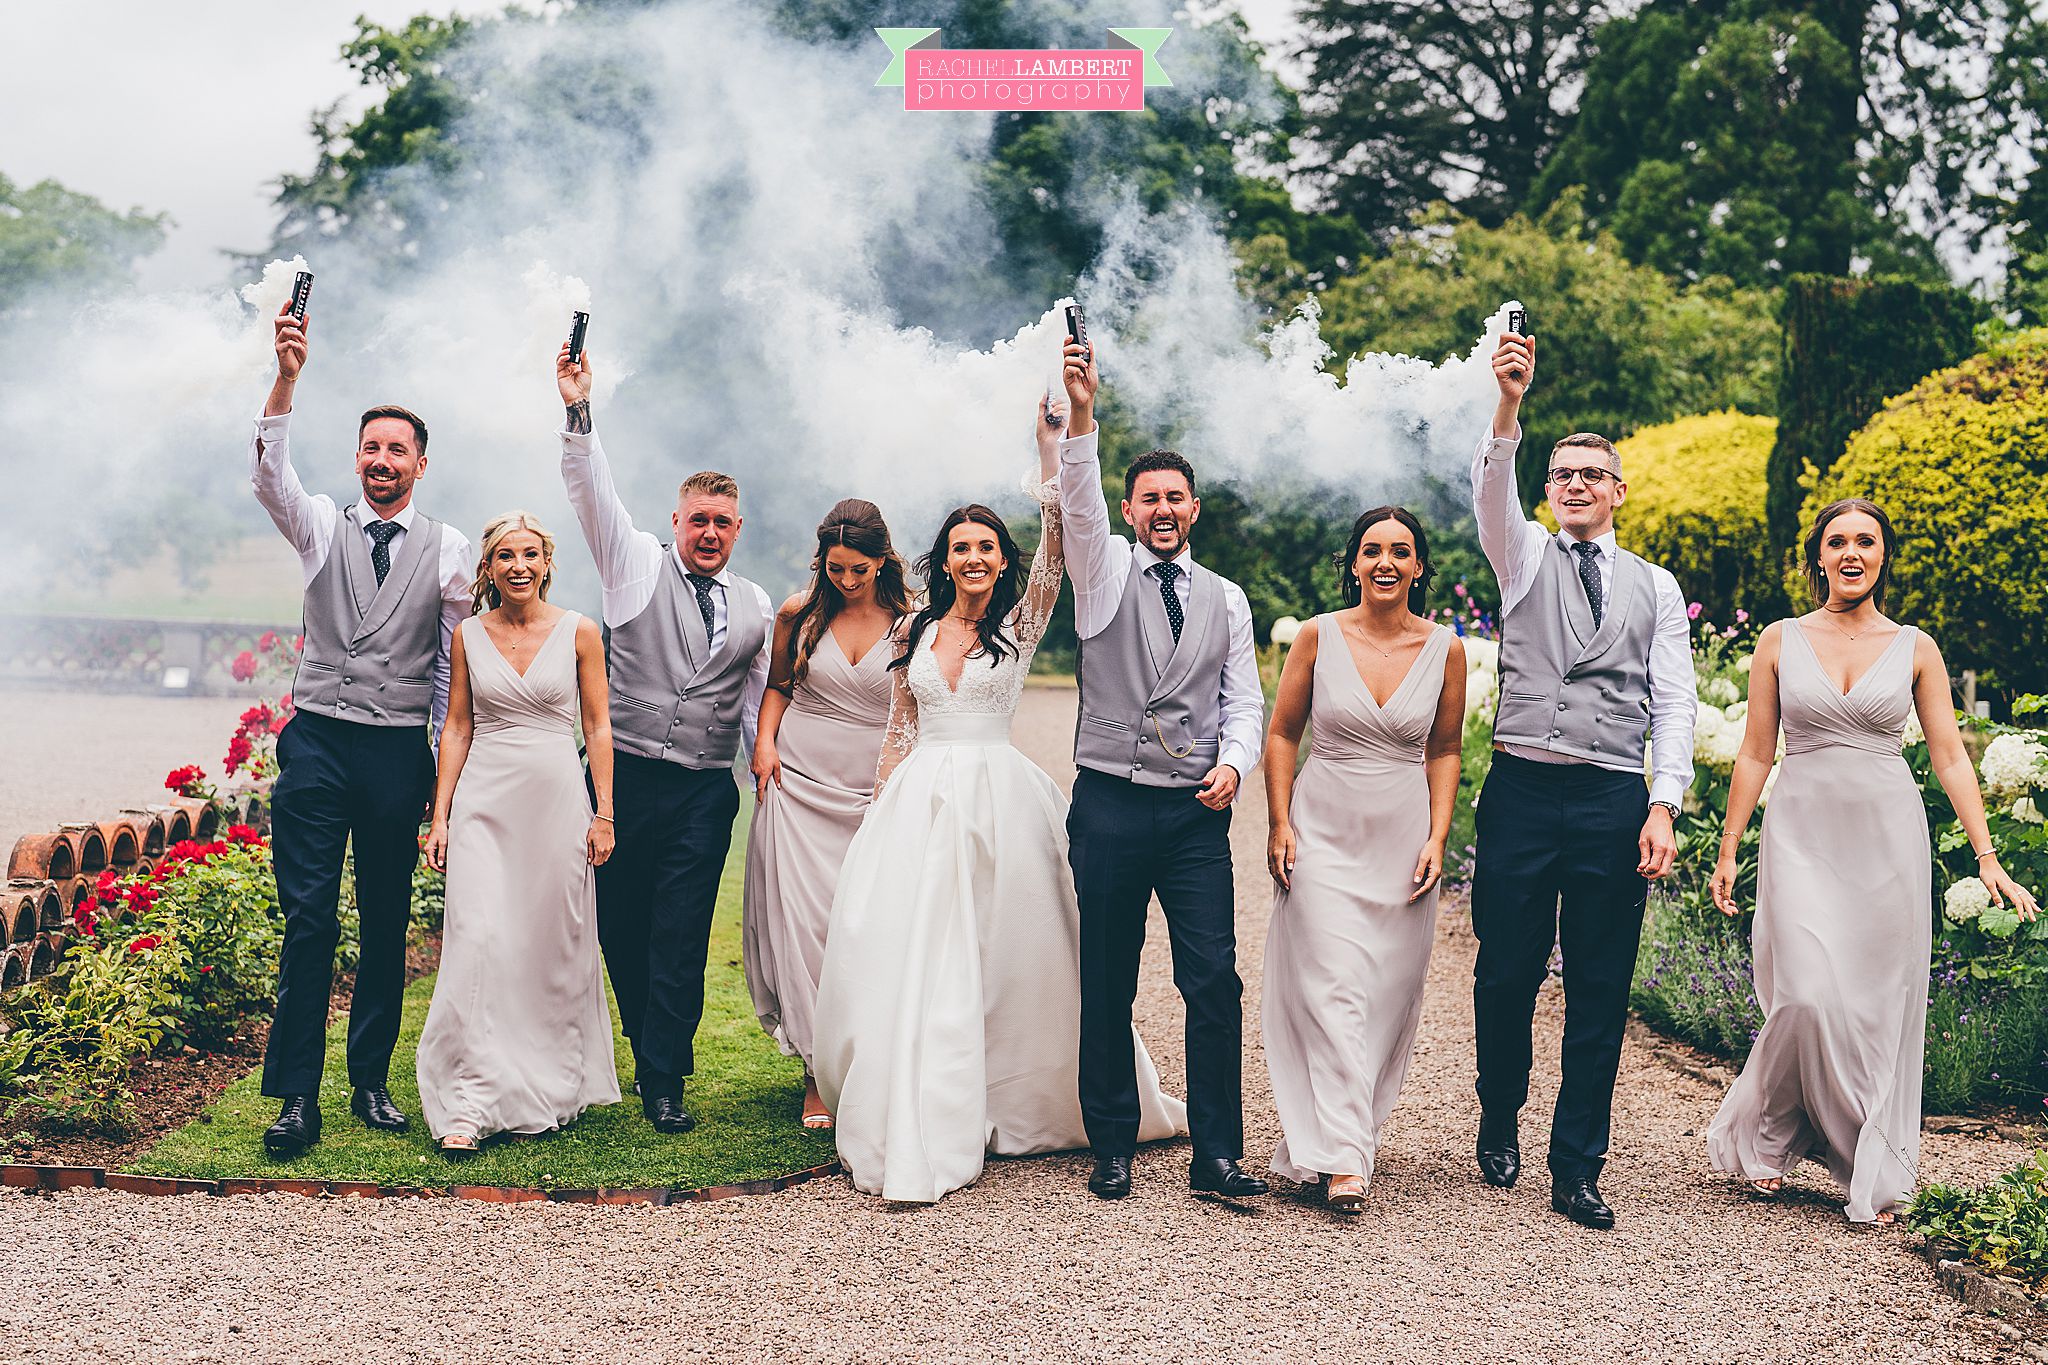 Cefn Tilla Court Weddings Rachel Lambert Photography smoke bombs